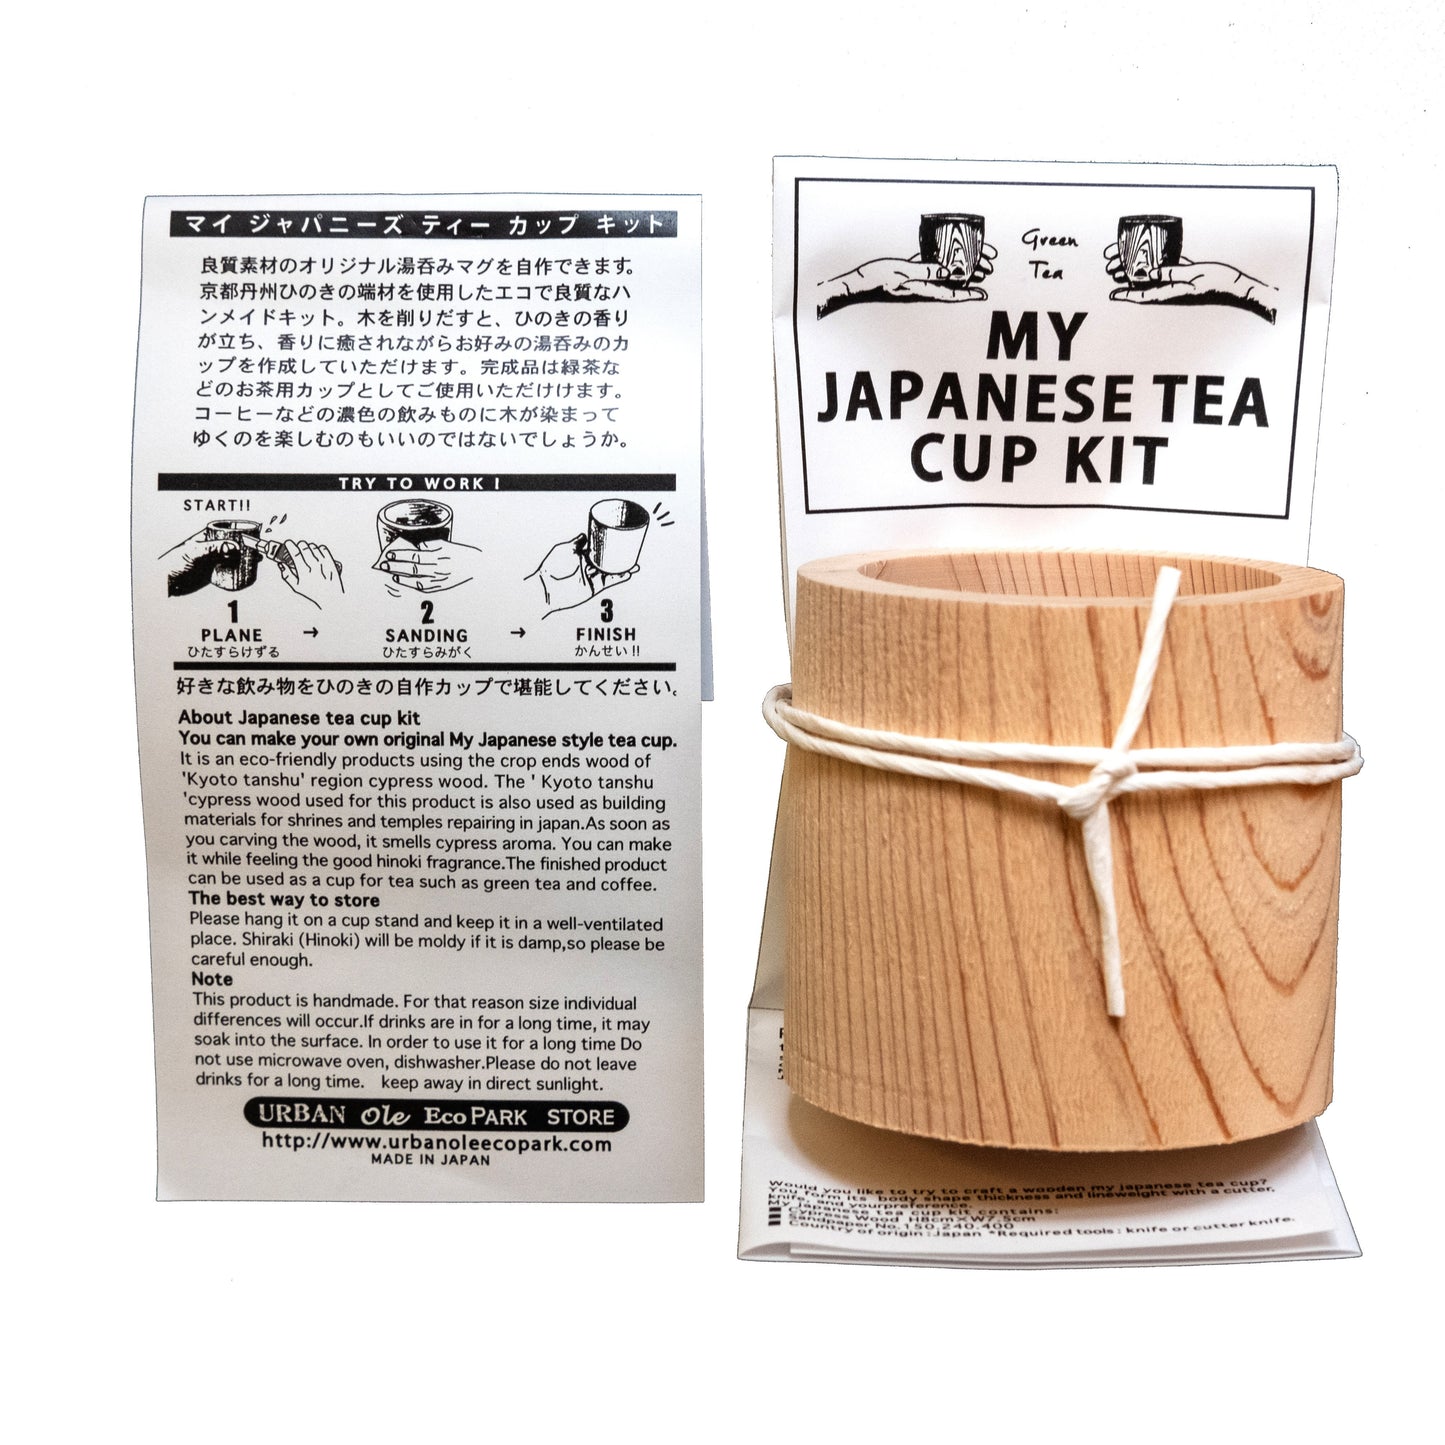 My Japanese Tea Cup Kit - LAB Collector Hong Kong